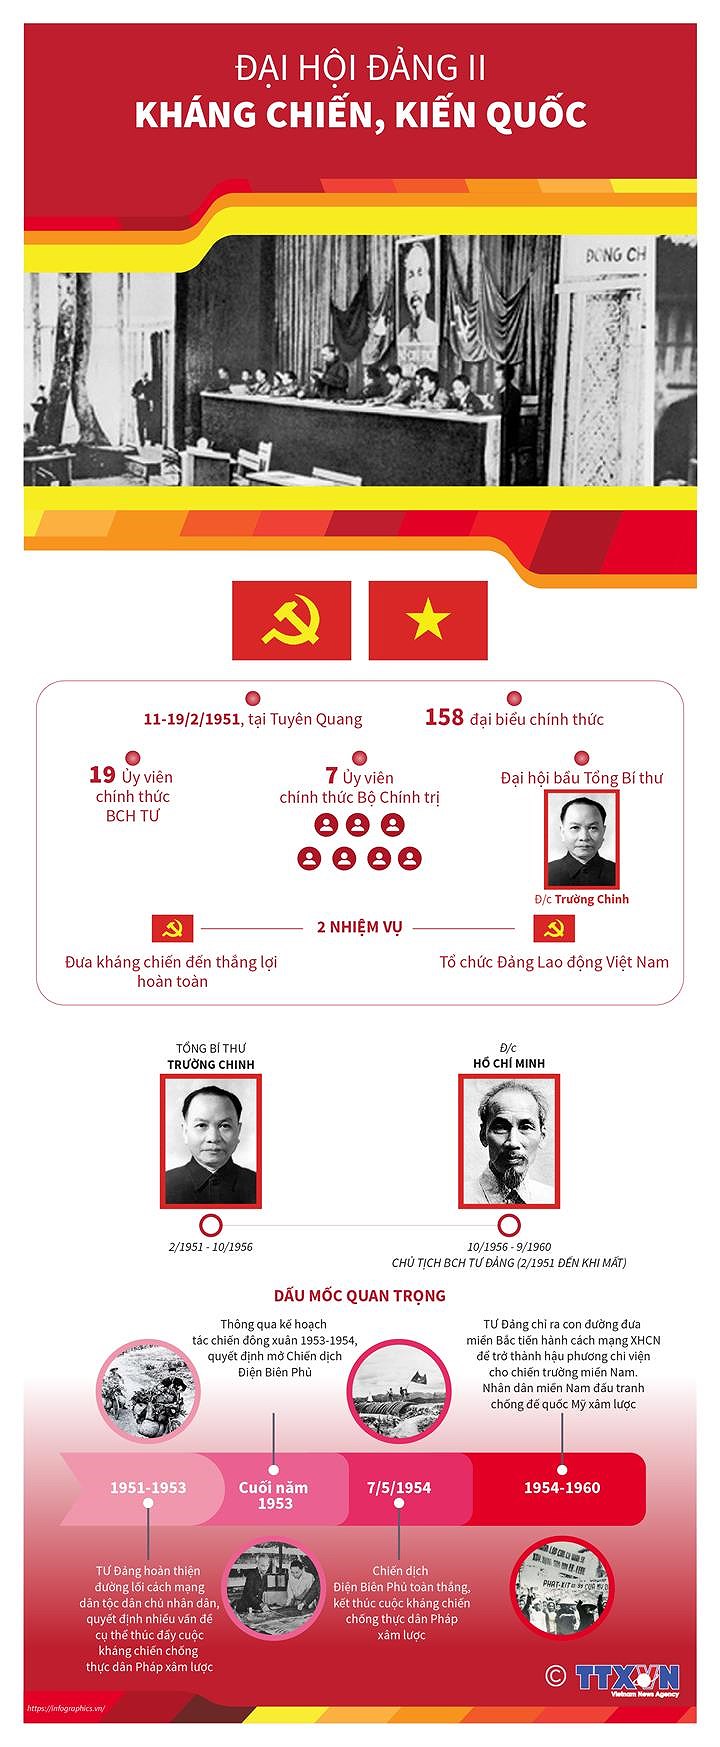 [Infographics] Dai hoi Dang II: Toan dan khang chien, kien quoc hinh anh 1